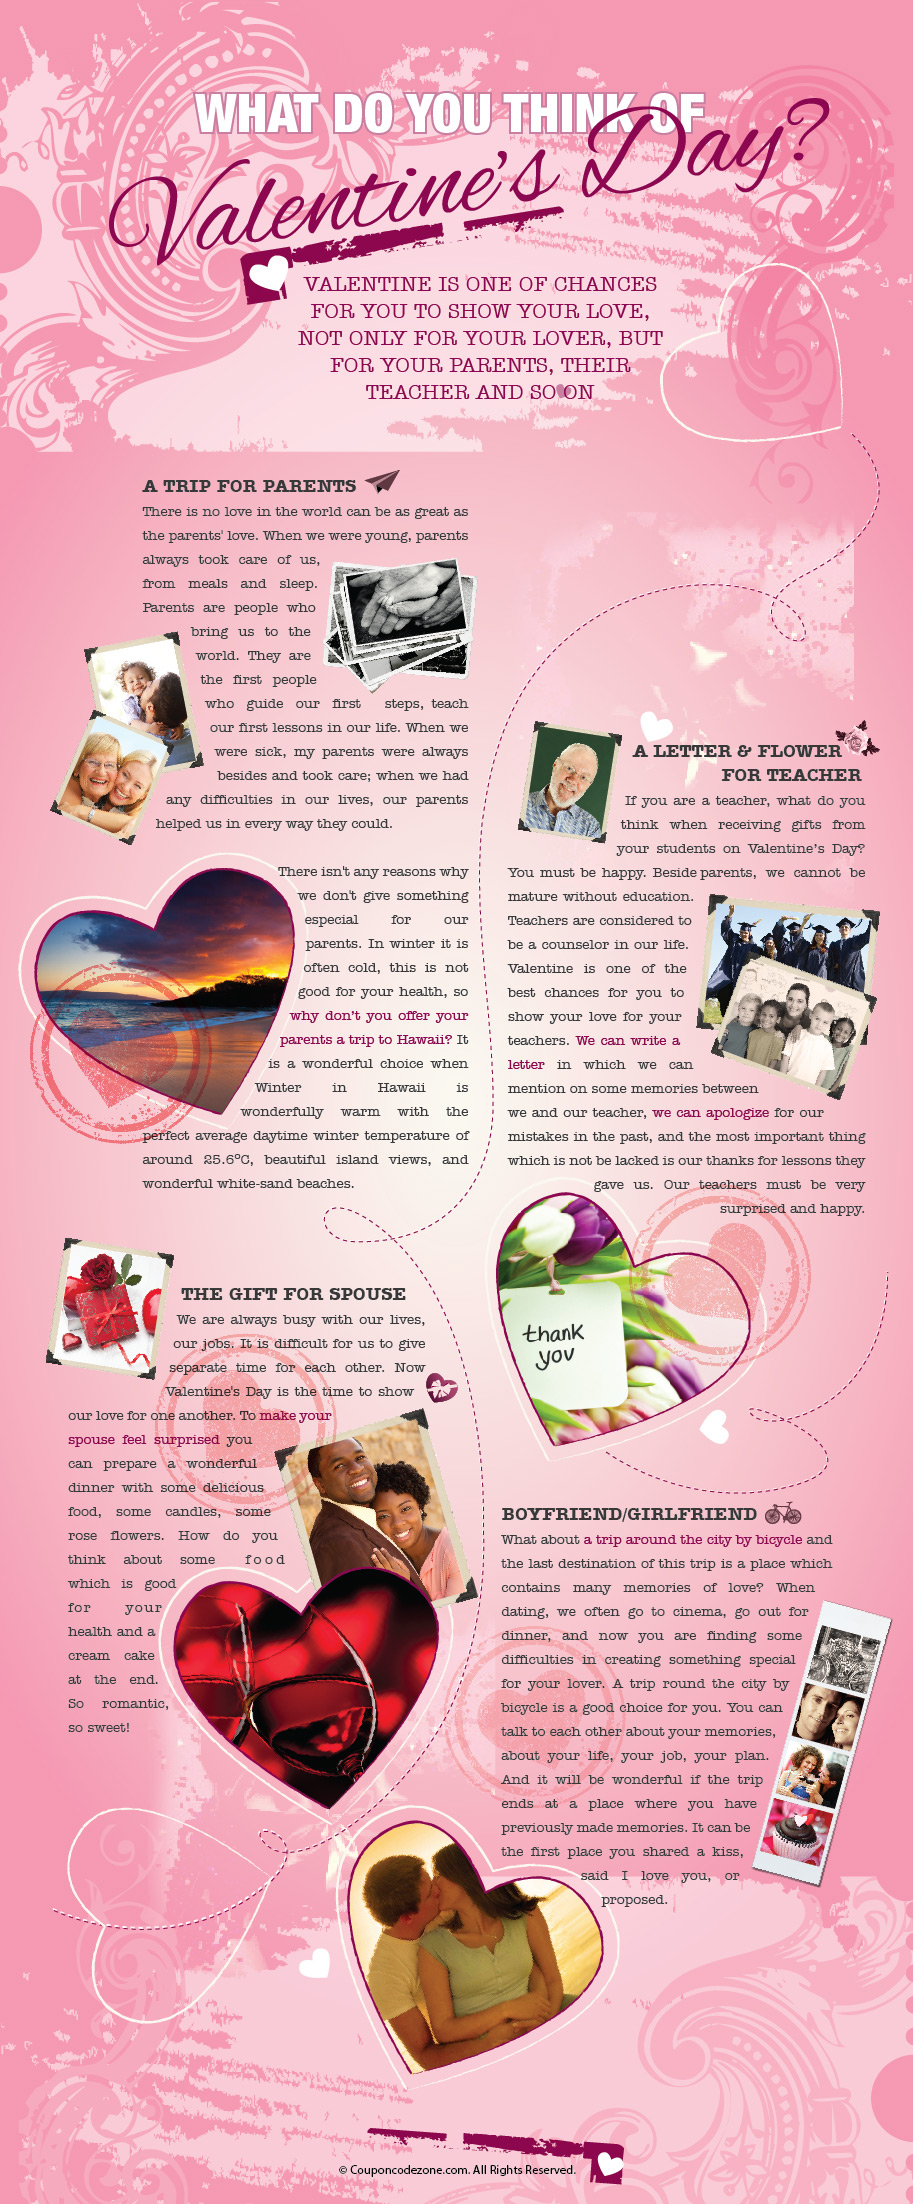 Valentine's Day gift ideas infographic